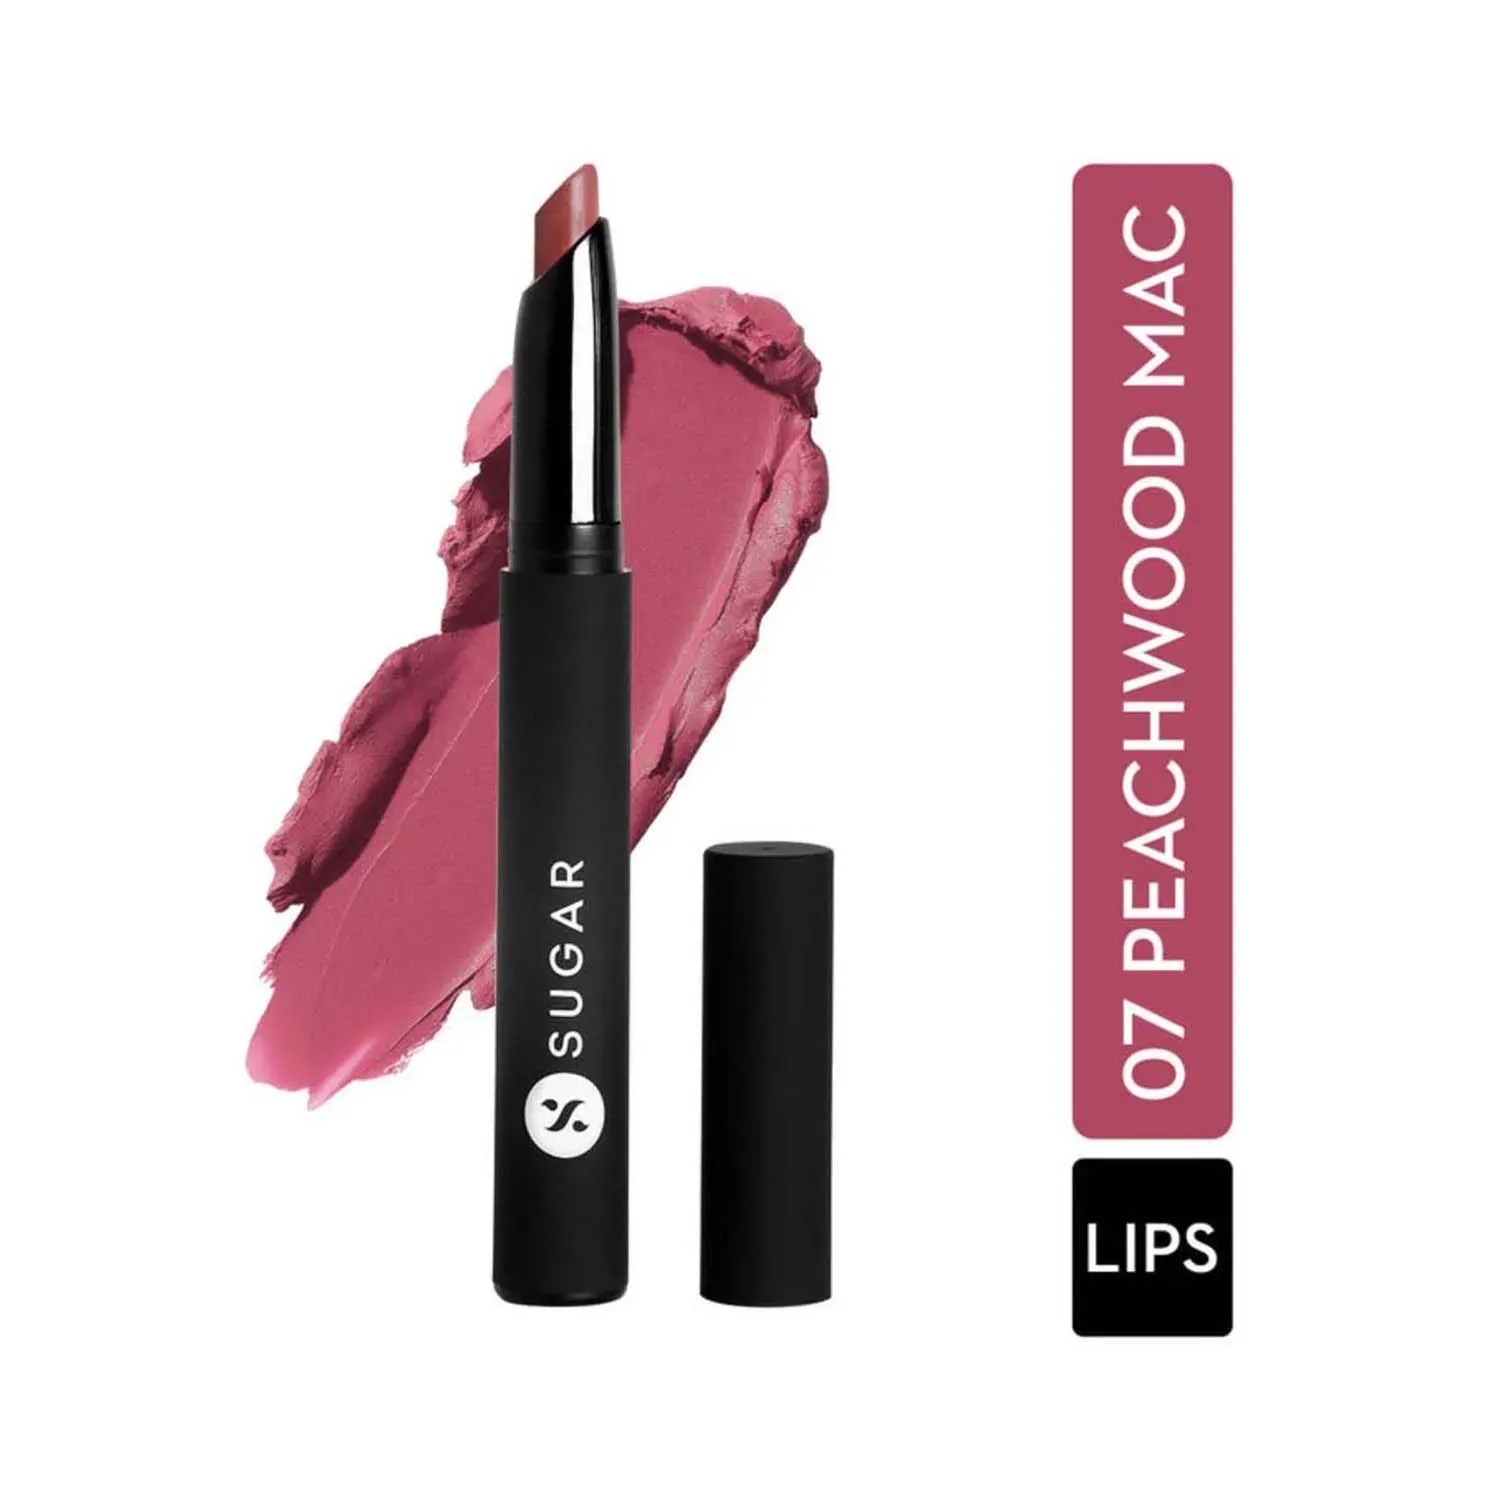 SUGAR Cosmetics | SUGAR Cosmetics Matte Attack Transferproof Lipstick - 07 Peachwood Mac (Peach Pink) (2g)